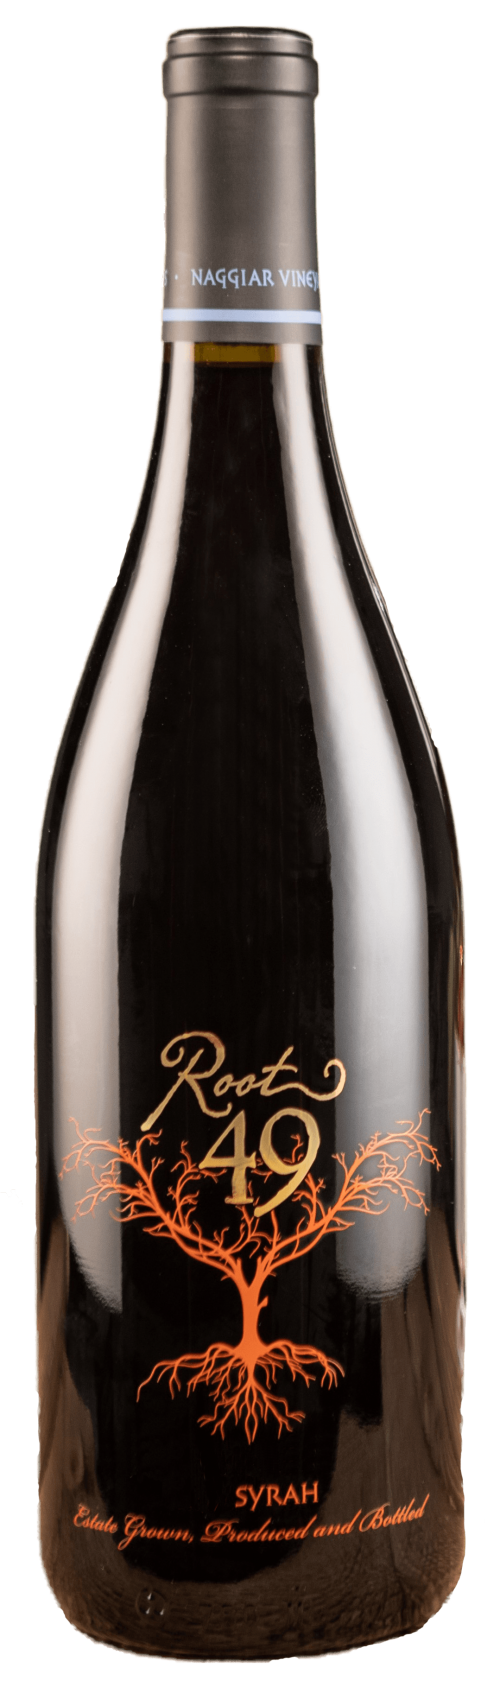 Root 49 Syrah wine bottle